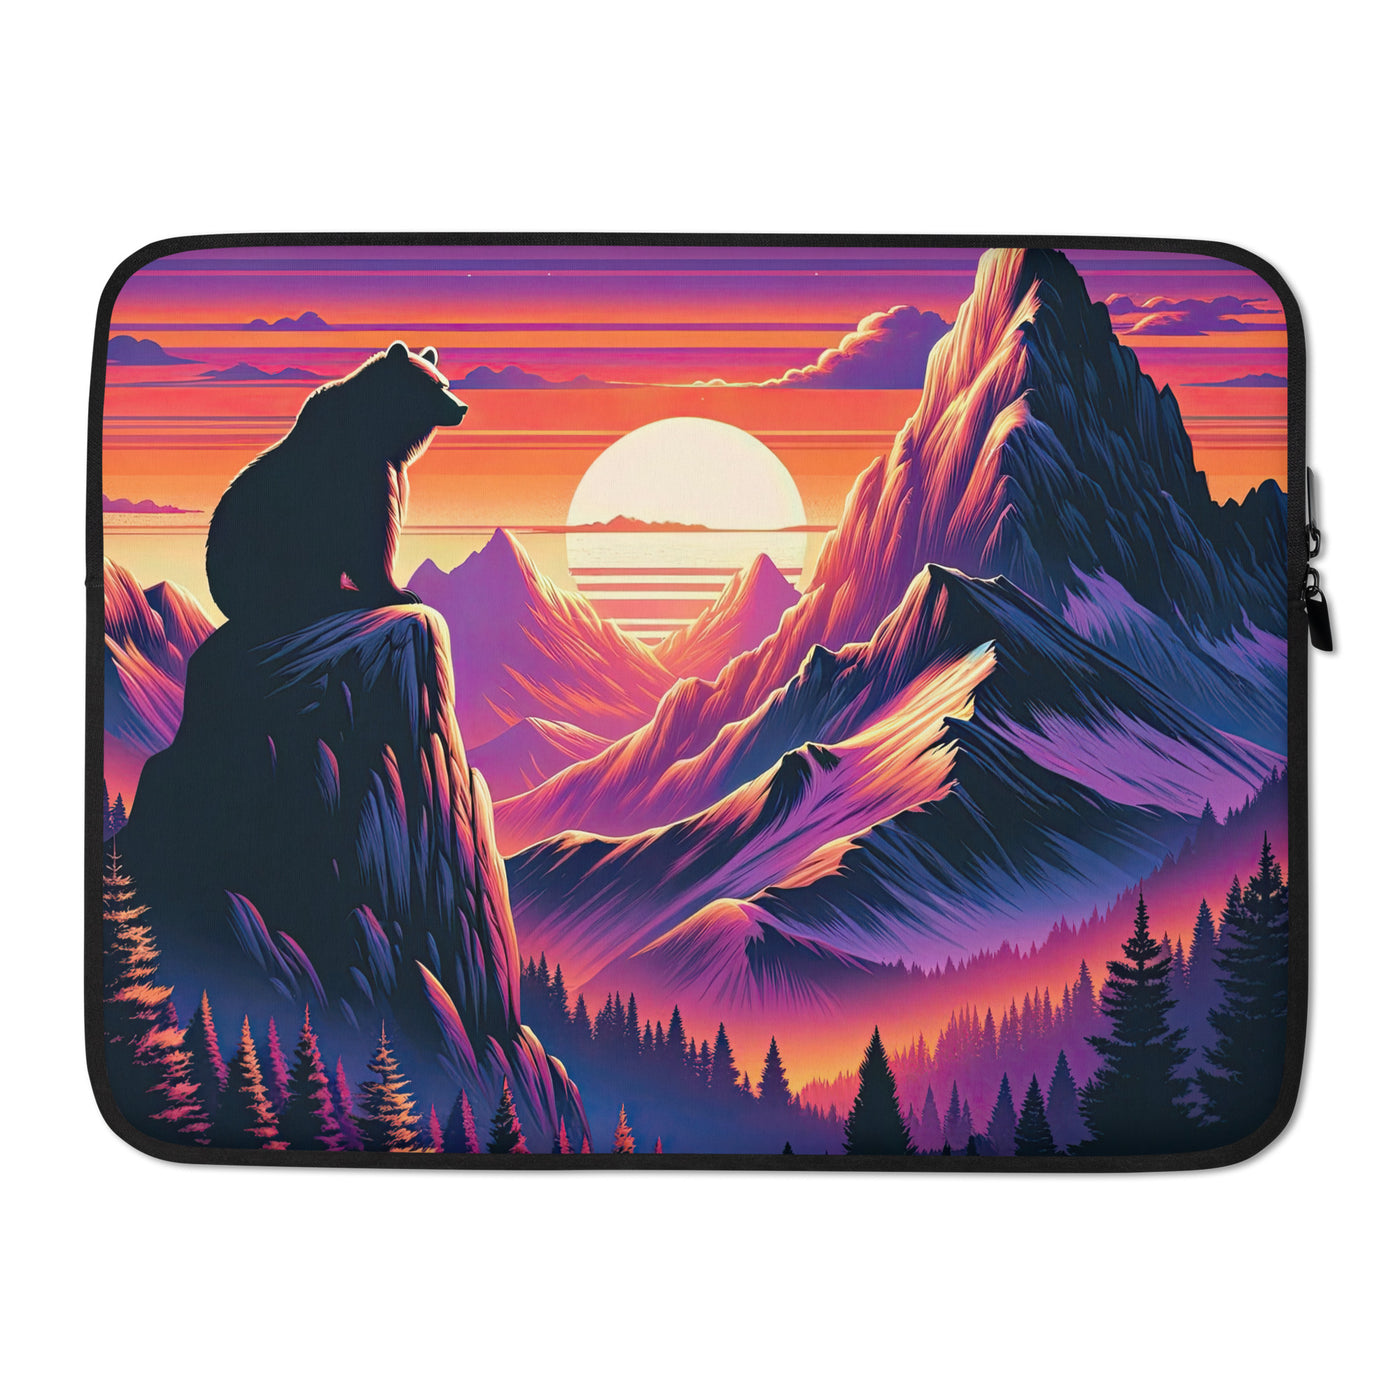 Alpen-Sonnenuntergang mit Bär auf Hügel, warmes Himmelsfarbenspiel - Laptophülle camping xxx yyy zzz 15″